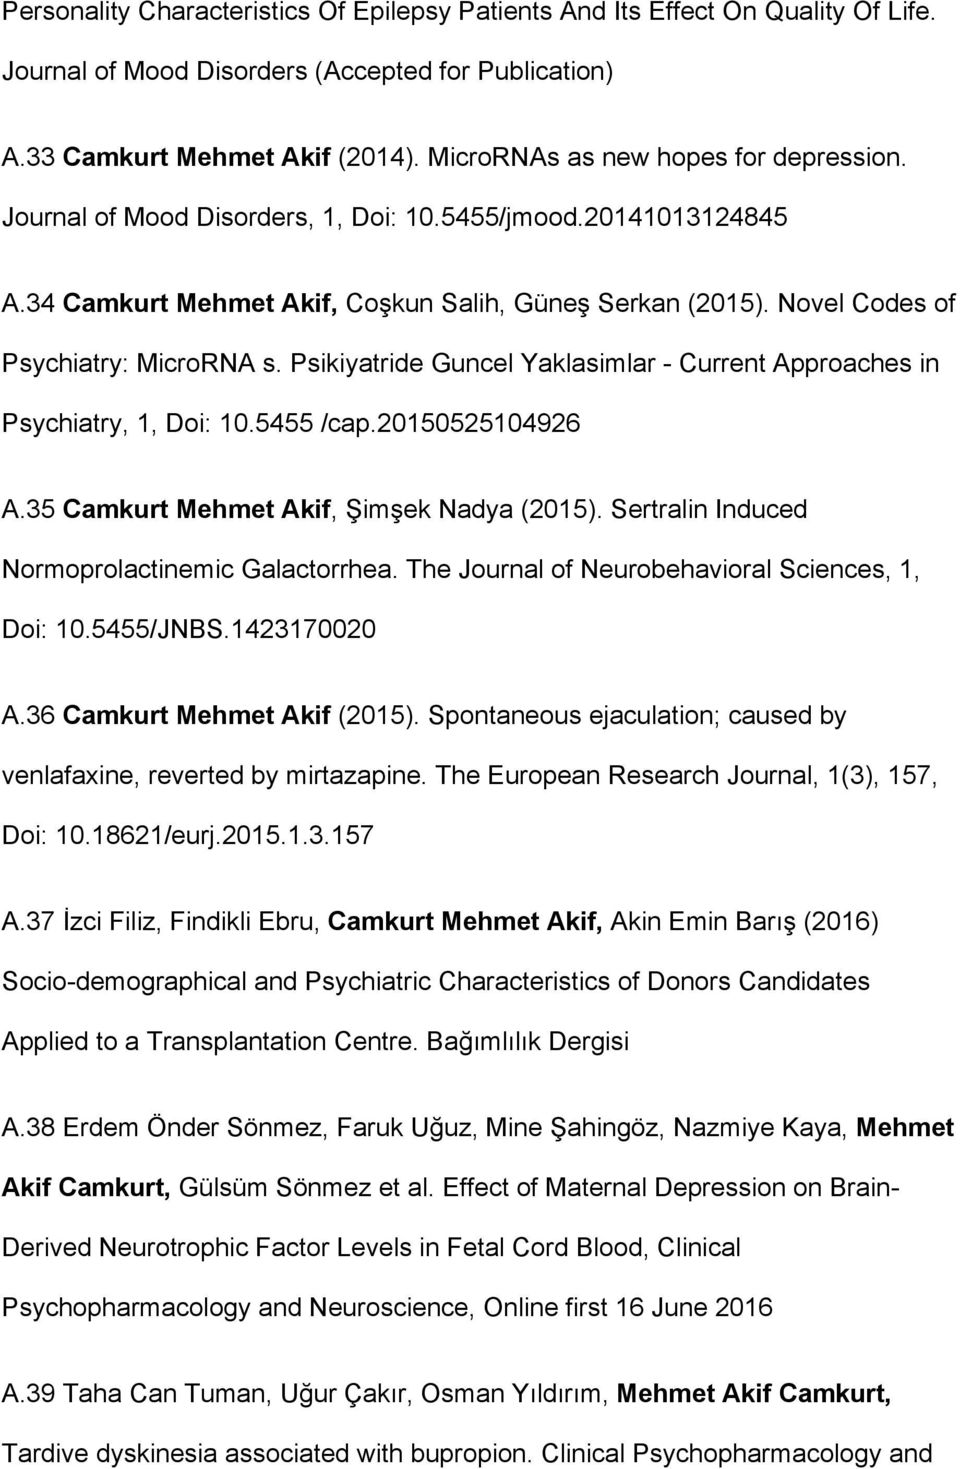 Novel Codes of Psychiatry: MicroRNA s. Psikiyatride Guncel Yaklasimlar - Current Approaches in Psychiatry, 1, Doi: 10.5455 /cap.20150525104926 A.35 Camkurt Mehmet Akif, Şimşek Nadya (2015).